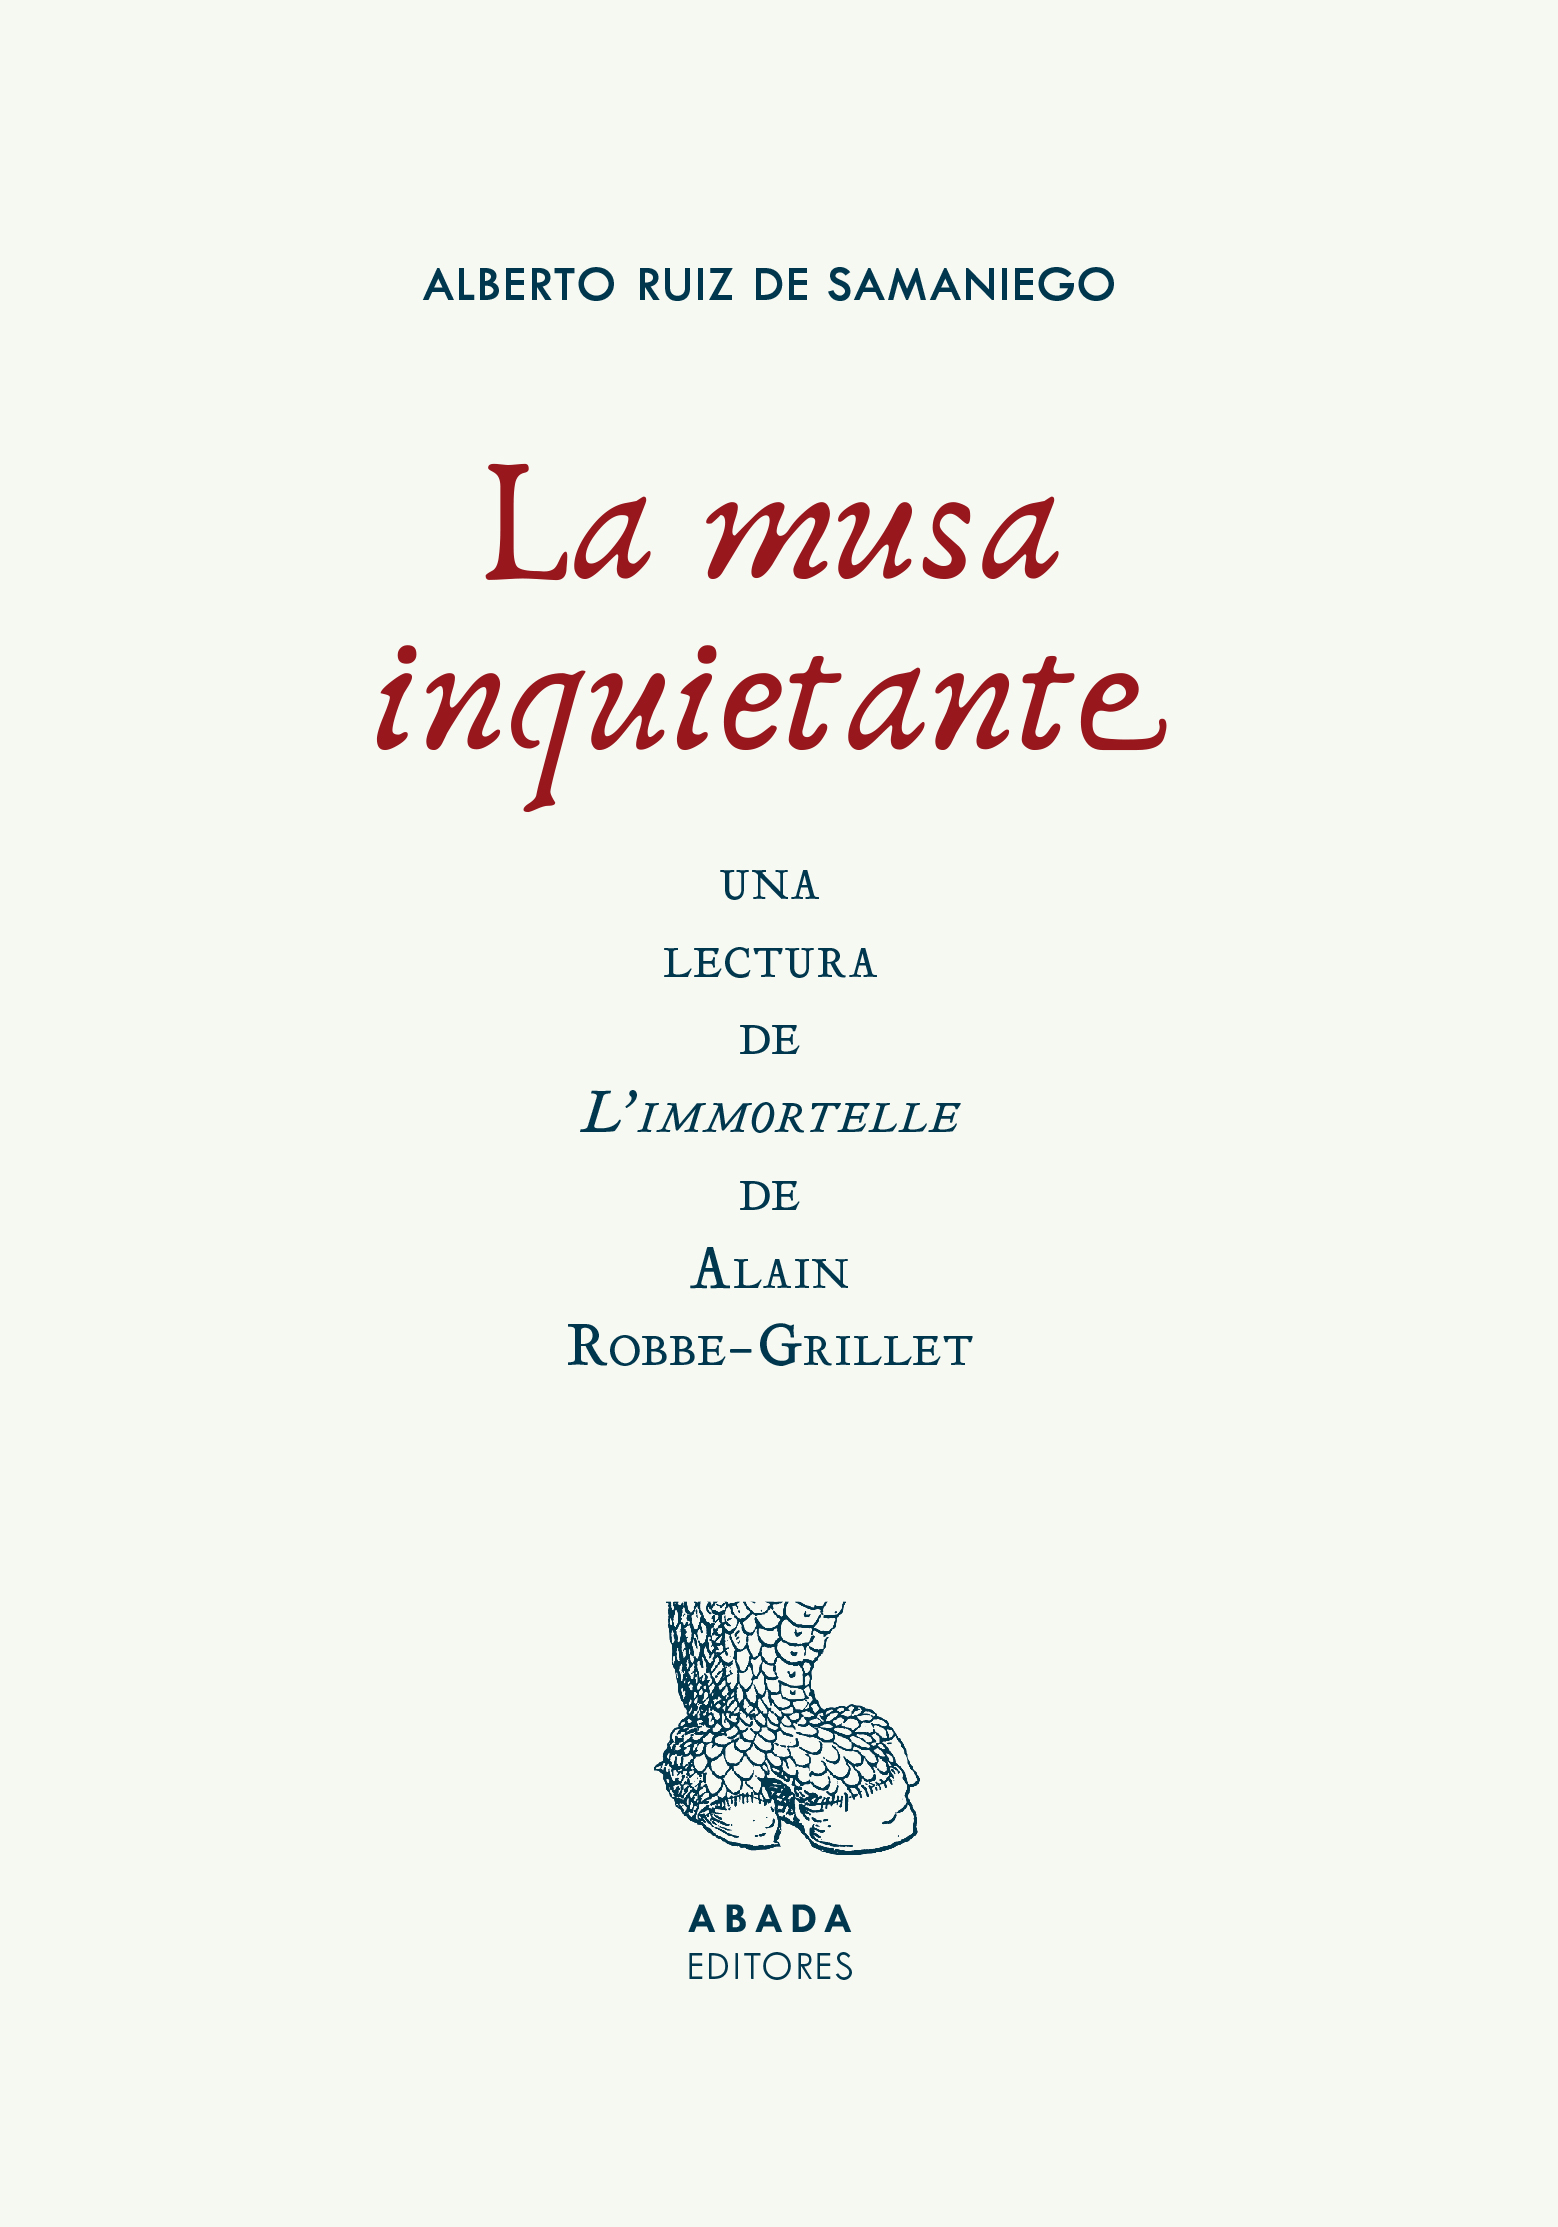 La musa inquietante   «Una lectura de L'immortelle de Alain Robbe-Grillet» (9788419008213)